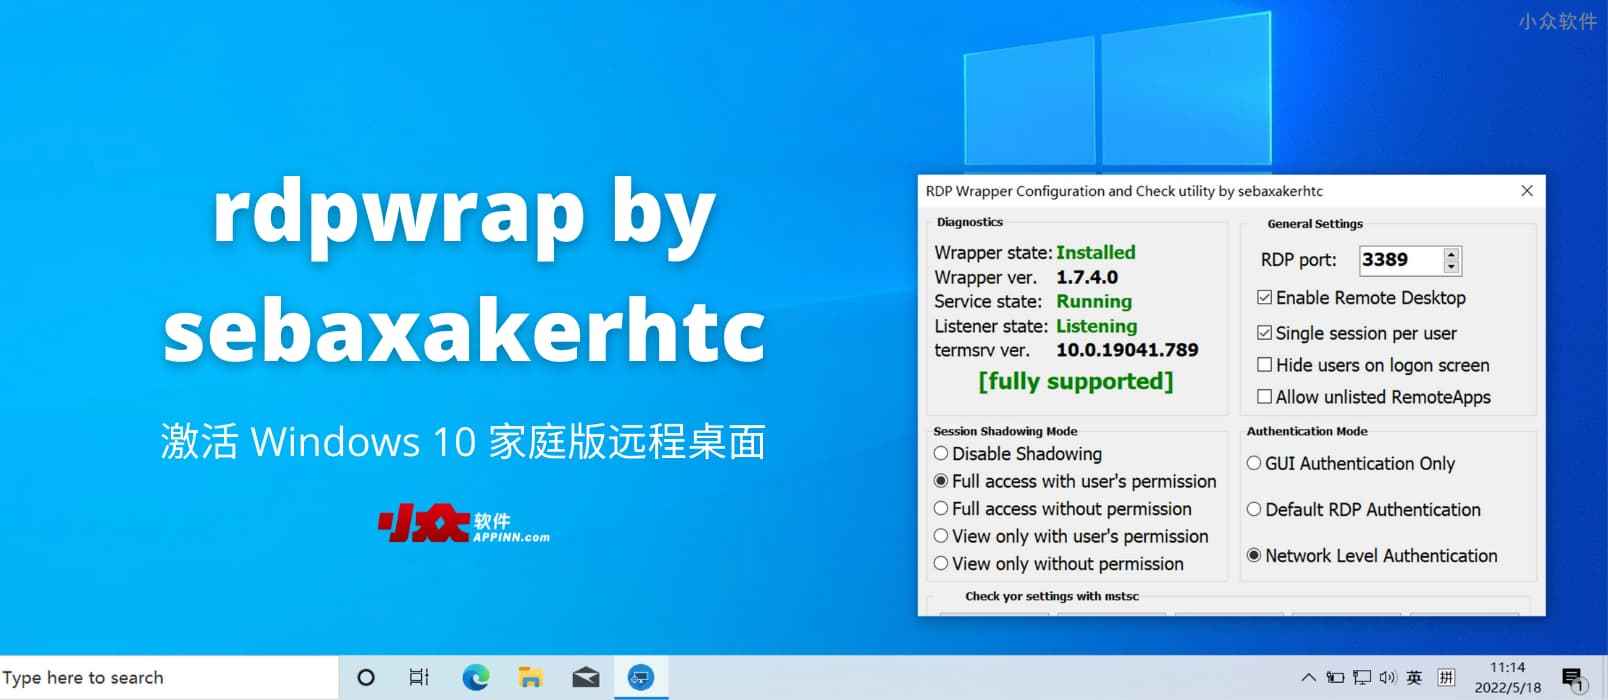 rdpwrap by sebaxakerhtc - 激活 Windows 10 家庭版的远程桌面 1